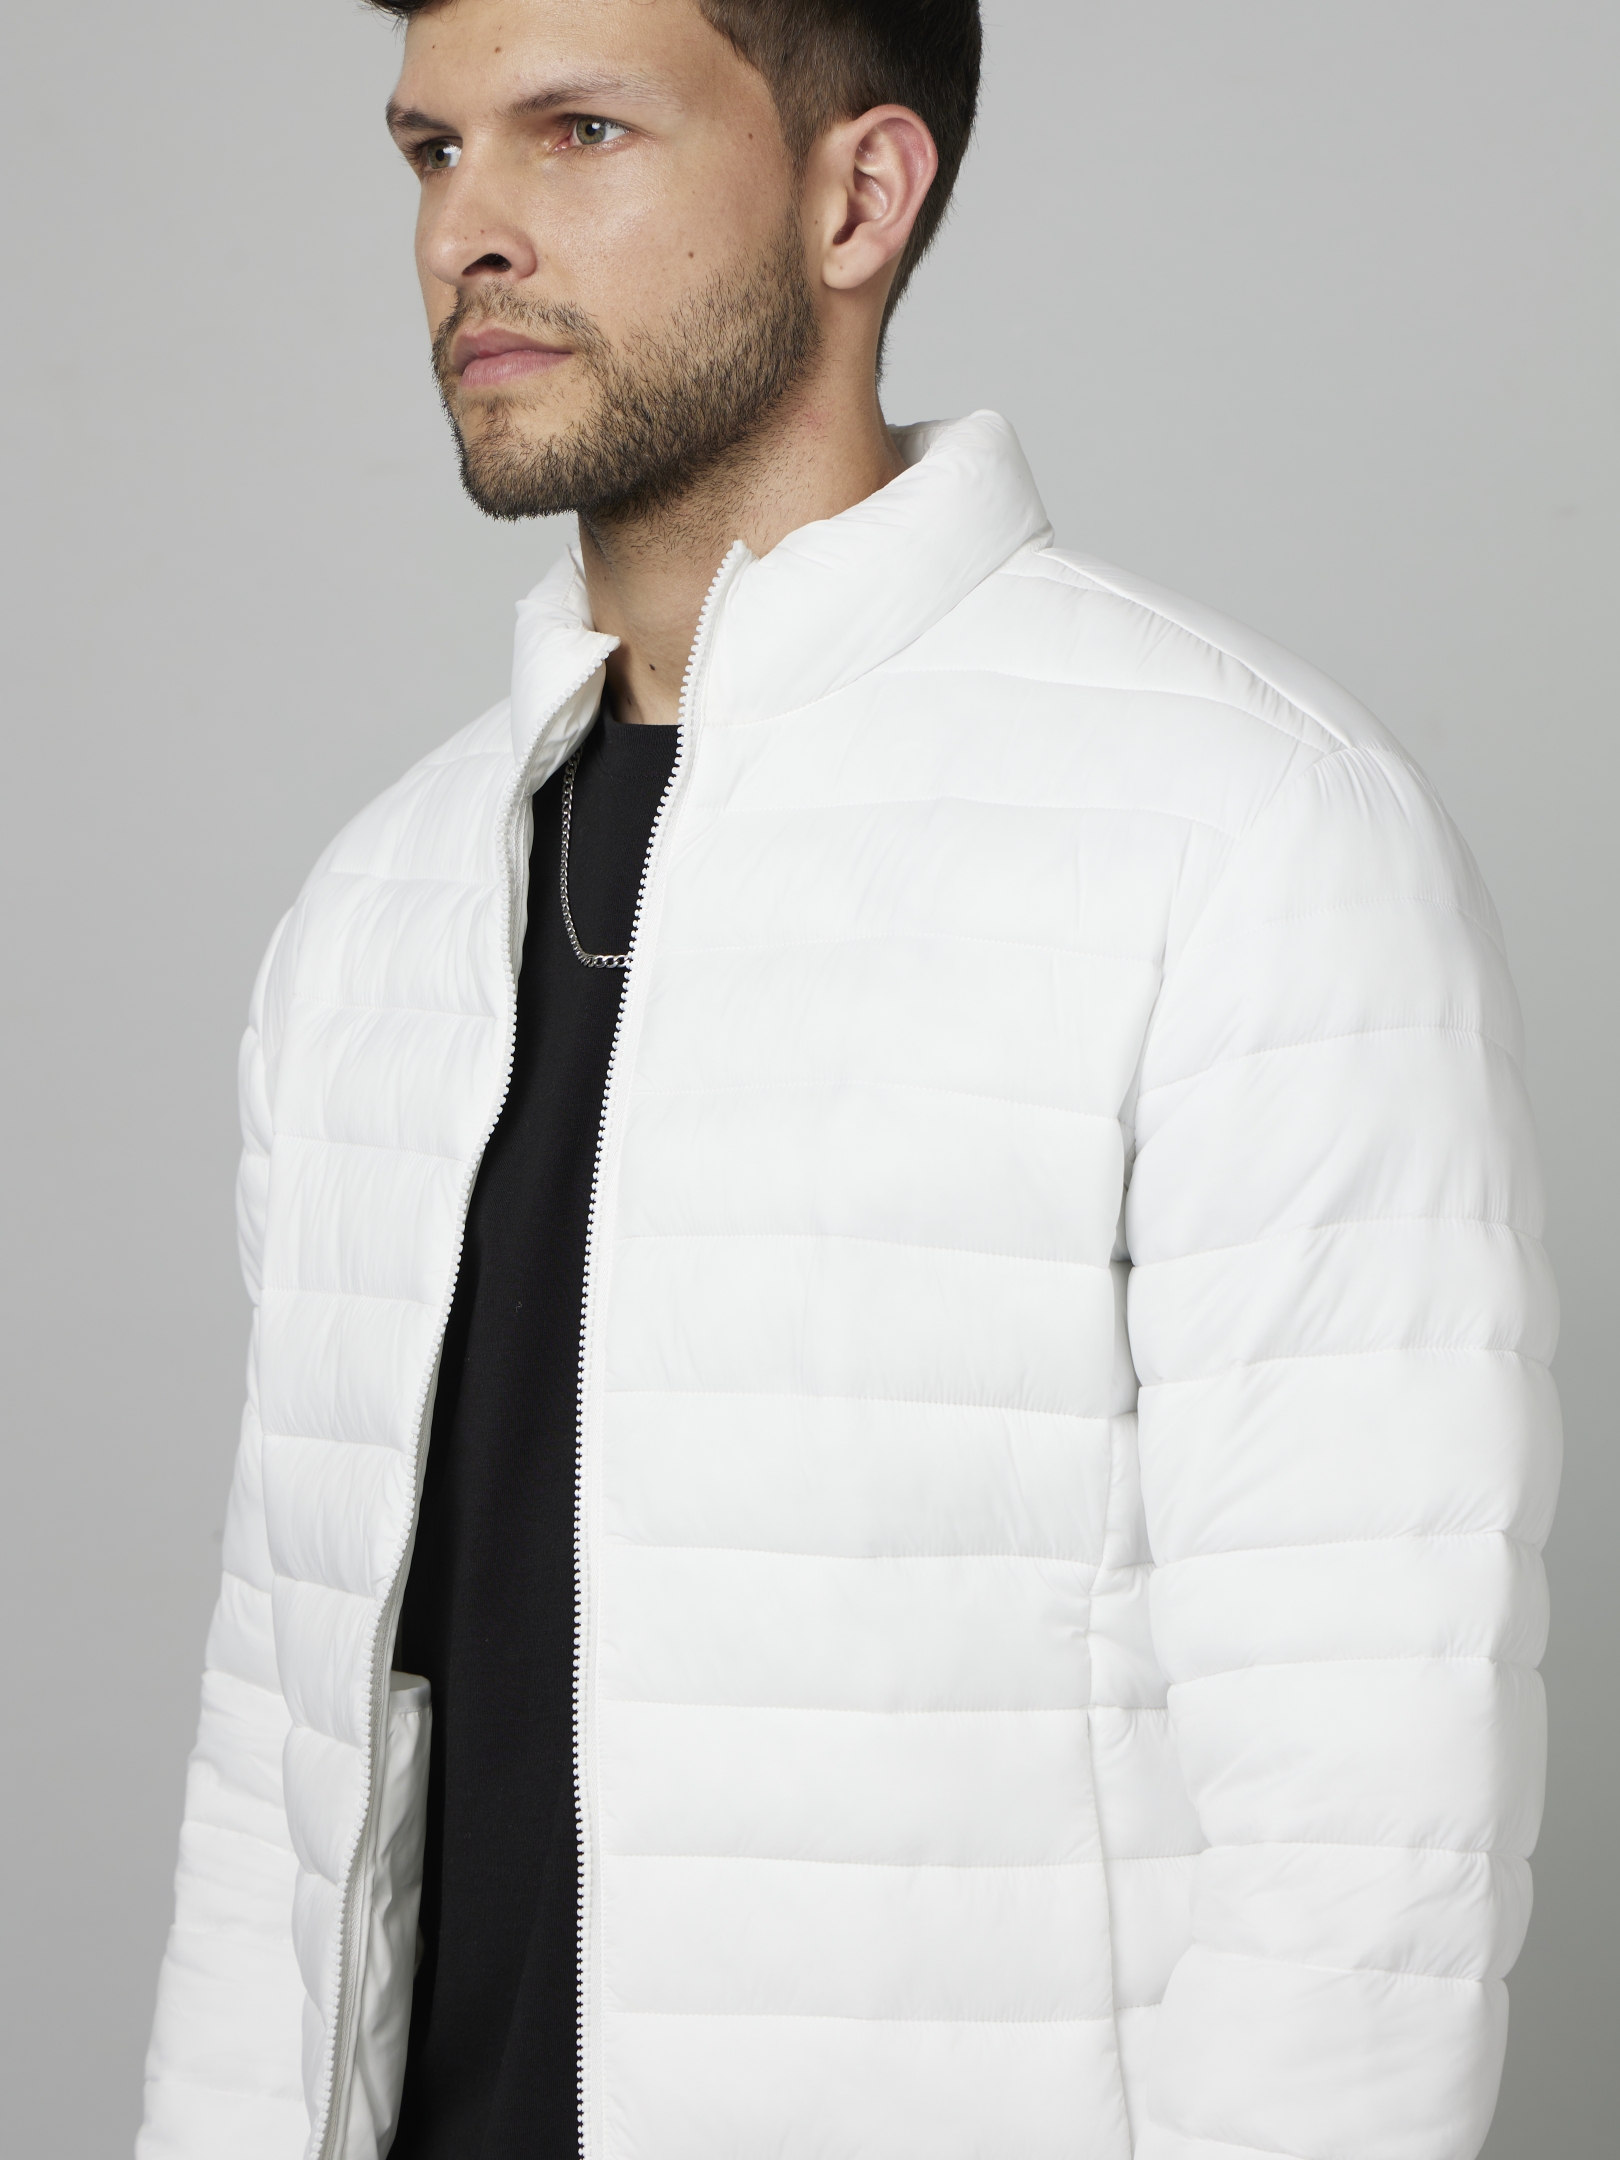 Buy Men White Solid Jacket Online - 540120 | Peter England